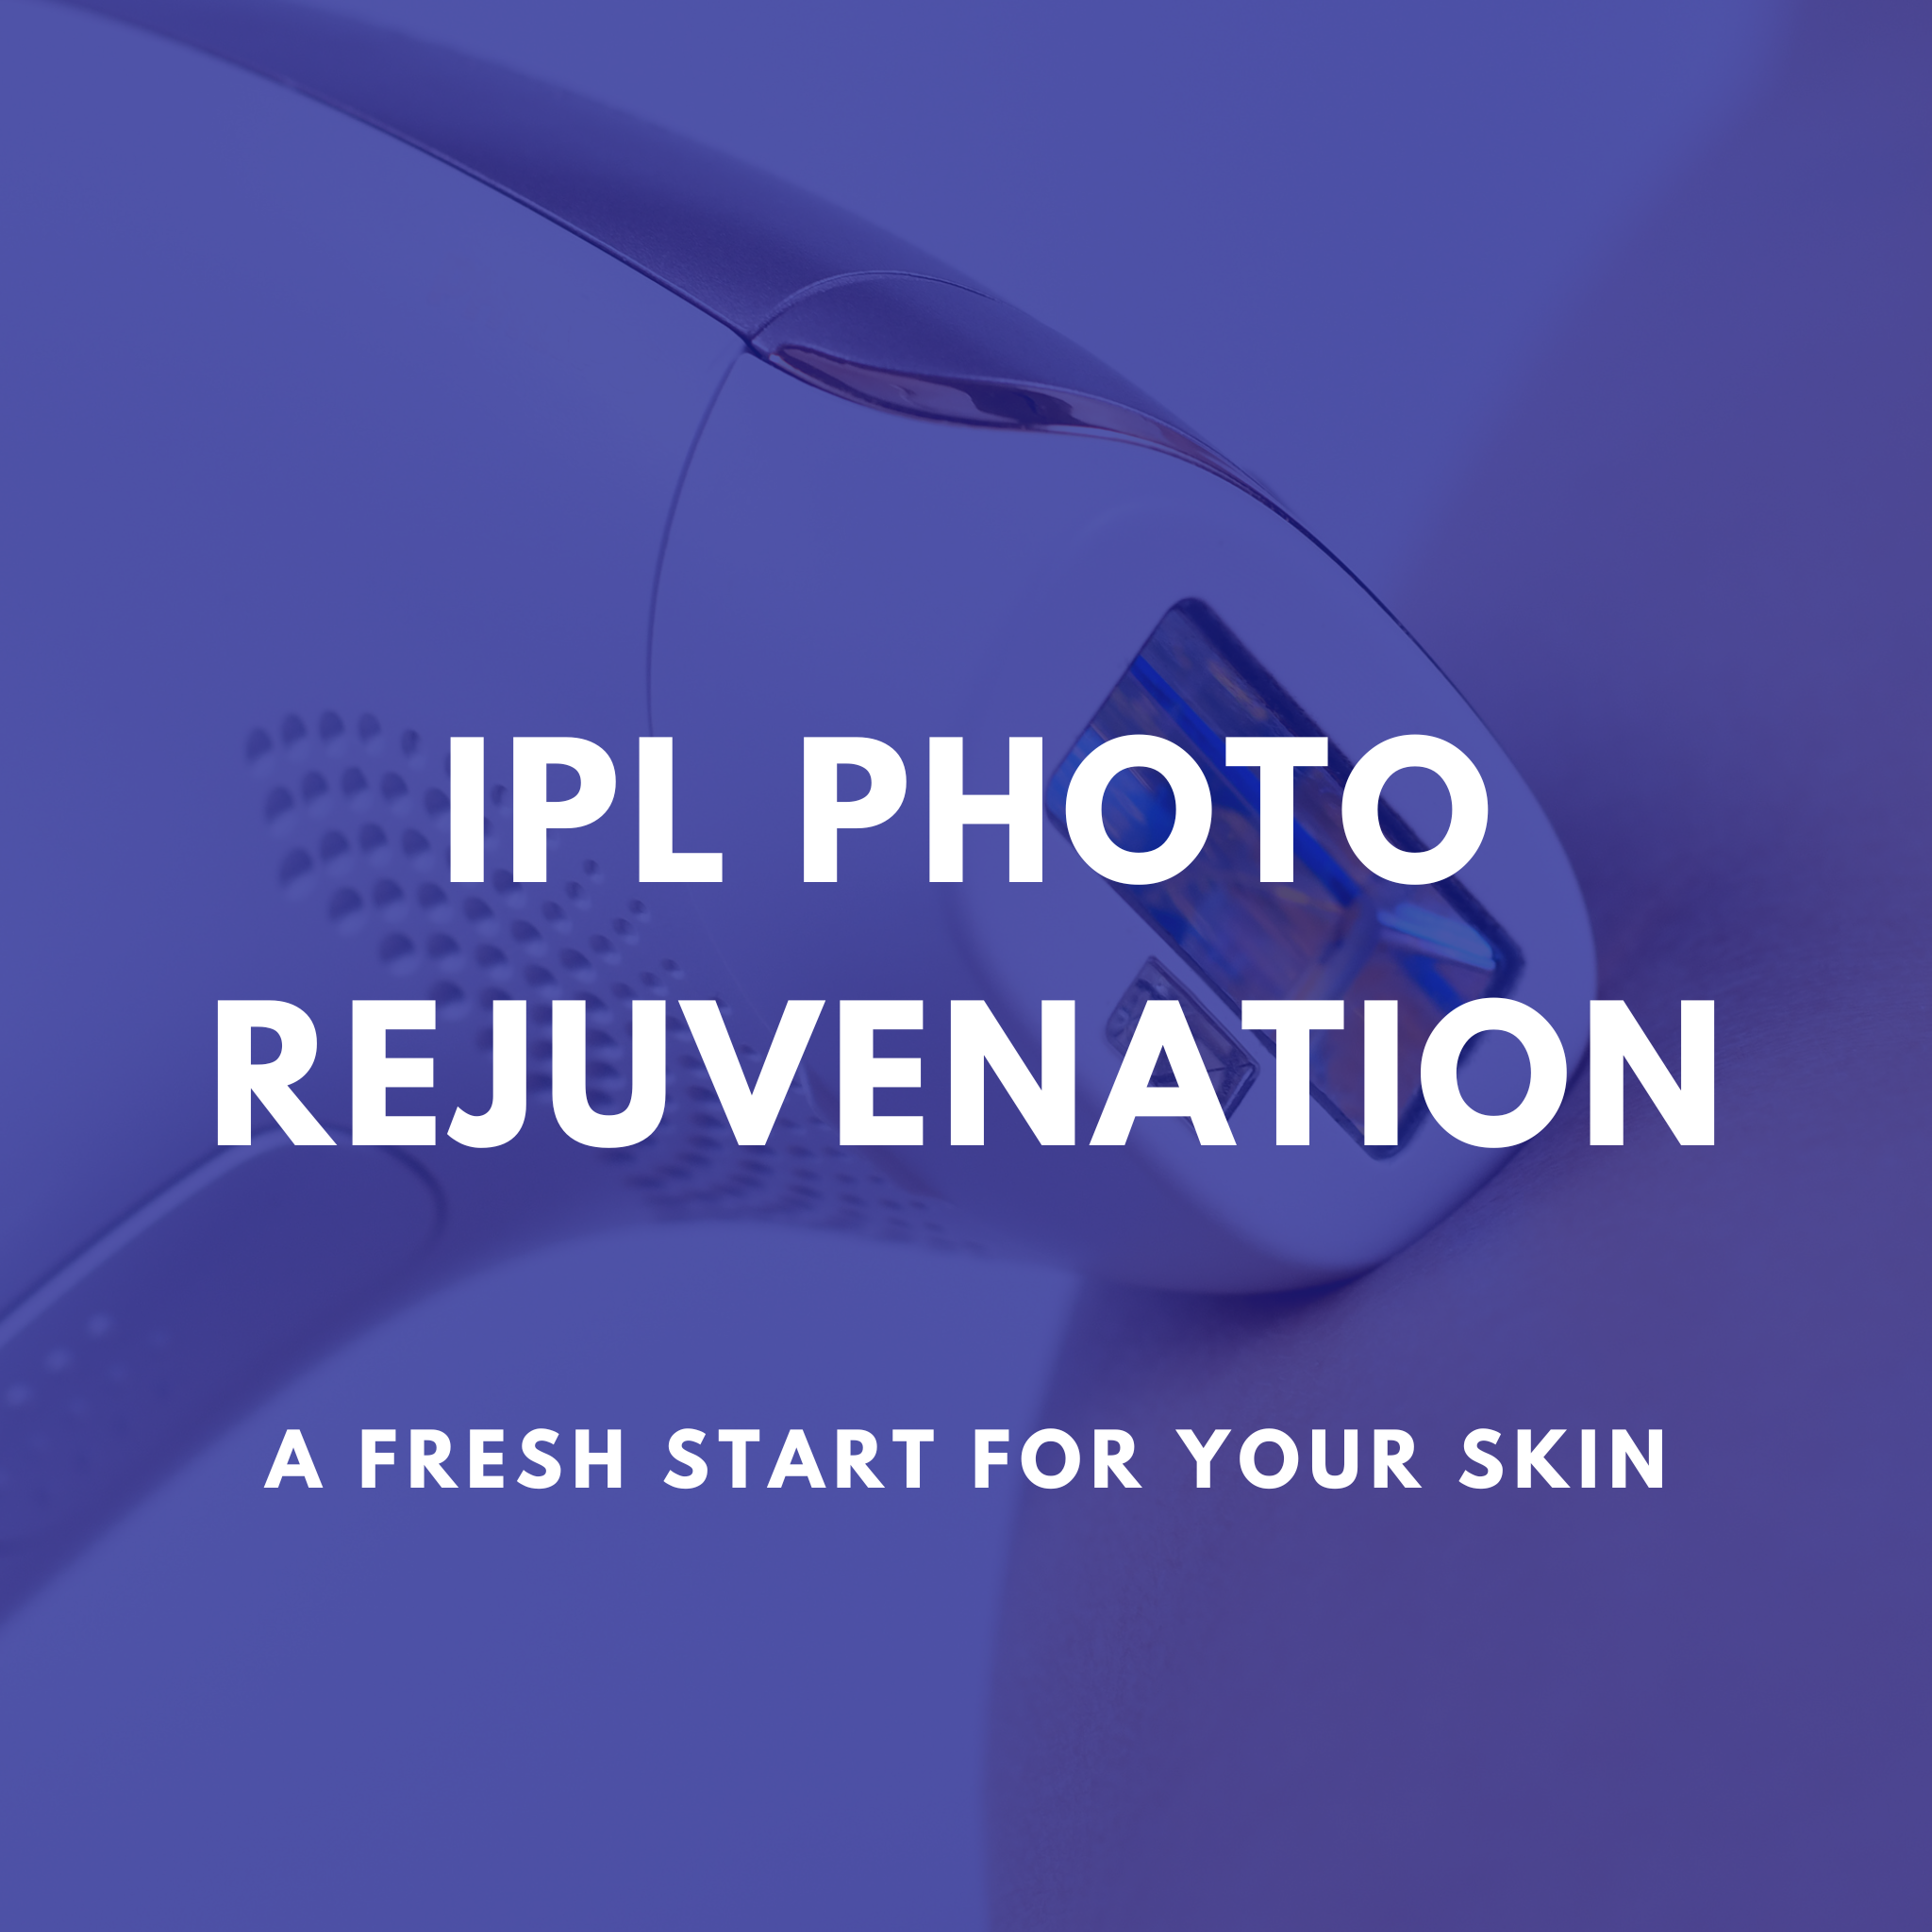 IPL Photo Rejuvenation